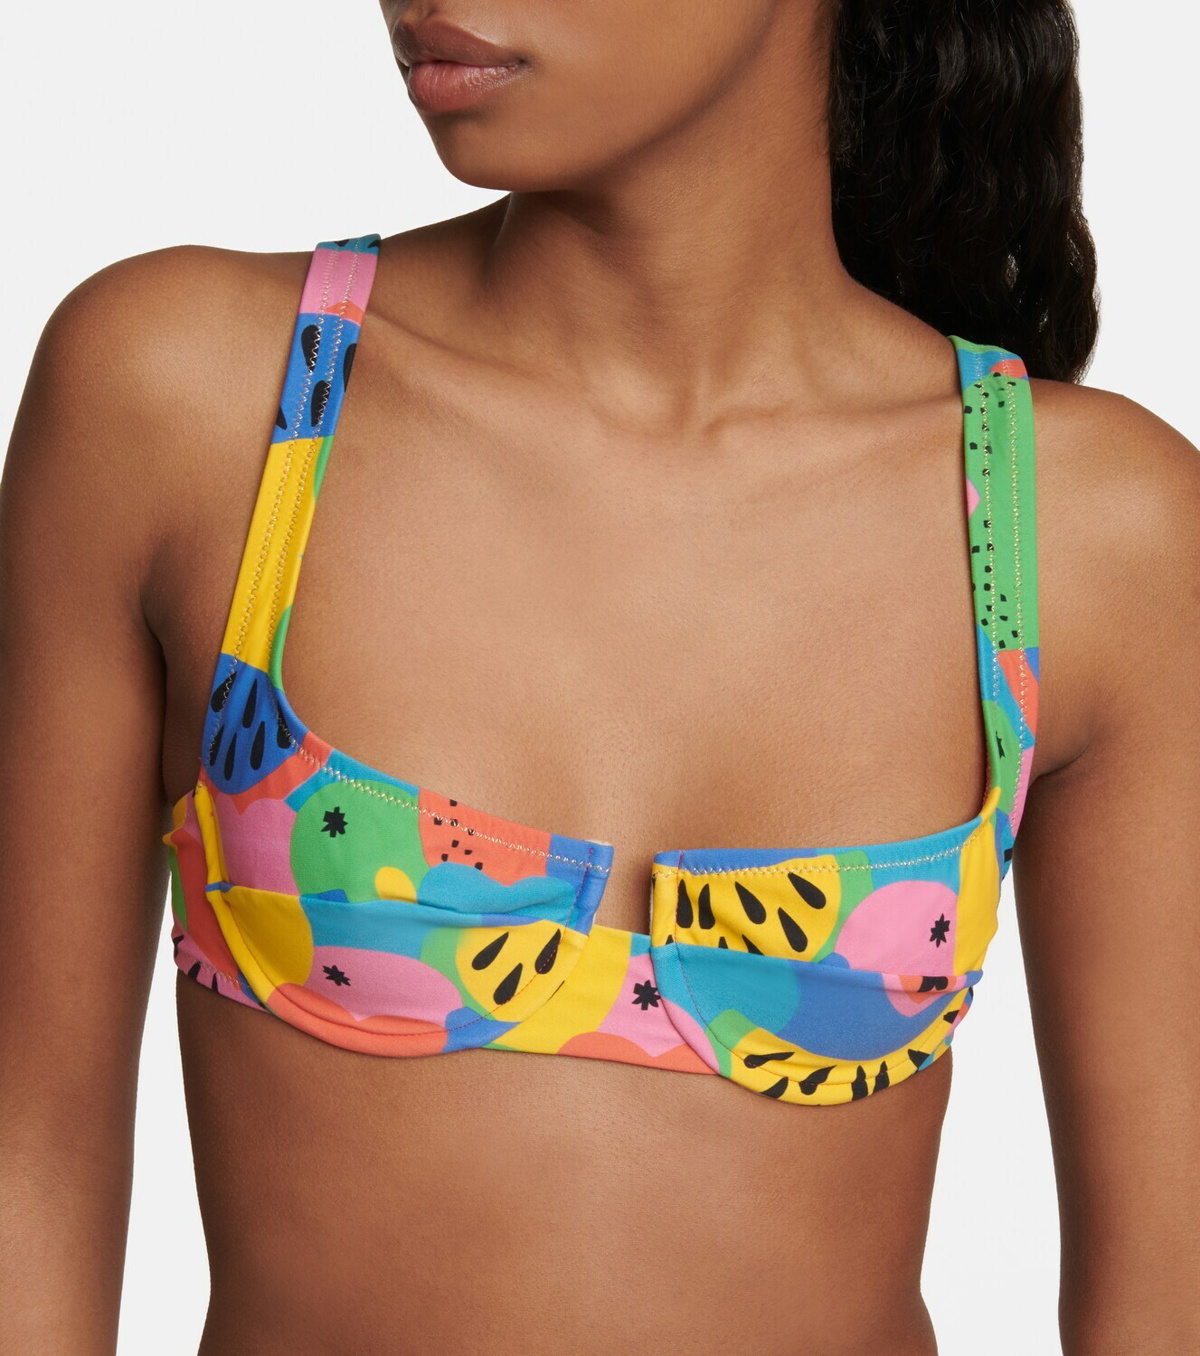 Brigitte printed bikini top in multicoloured - Reina Olga